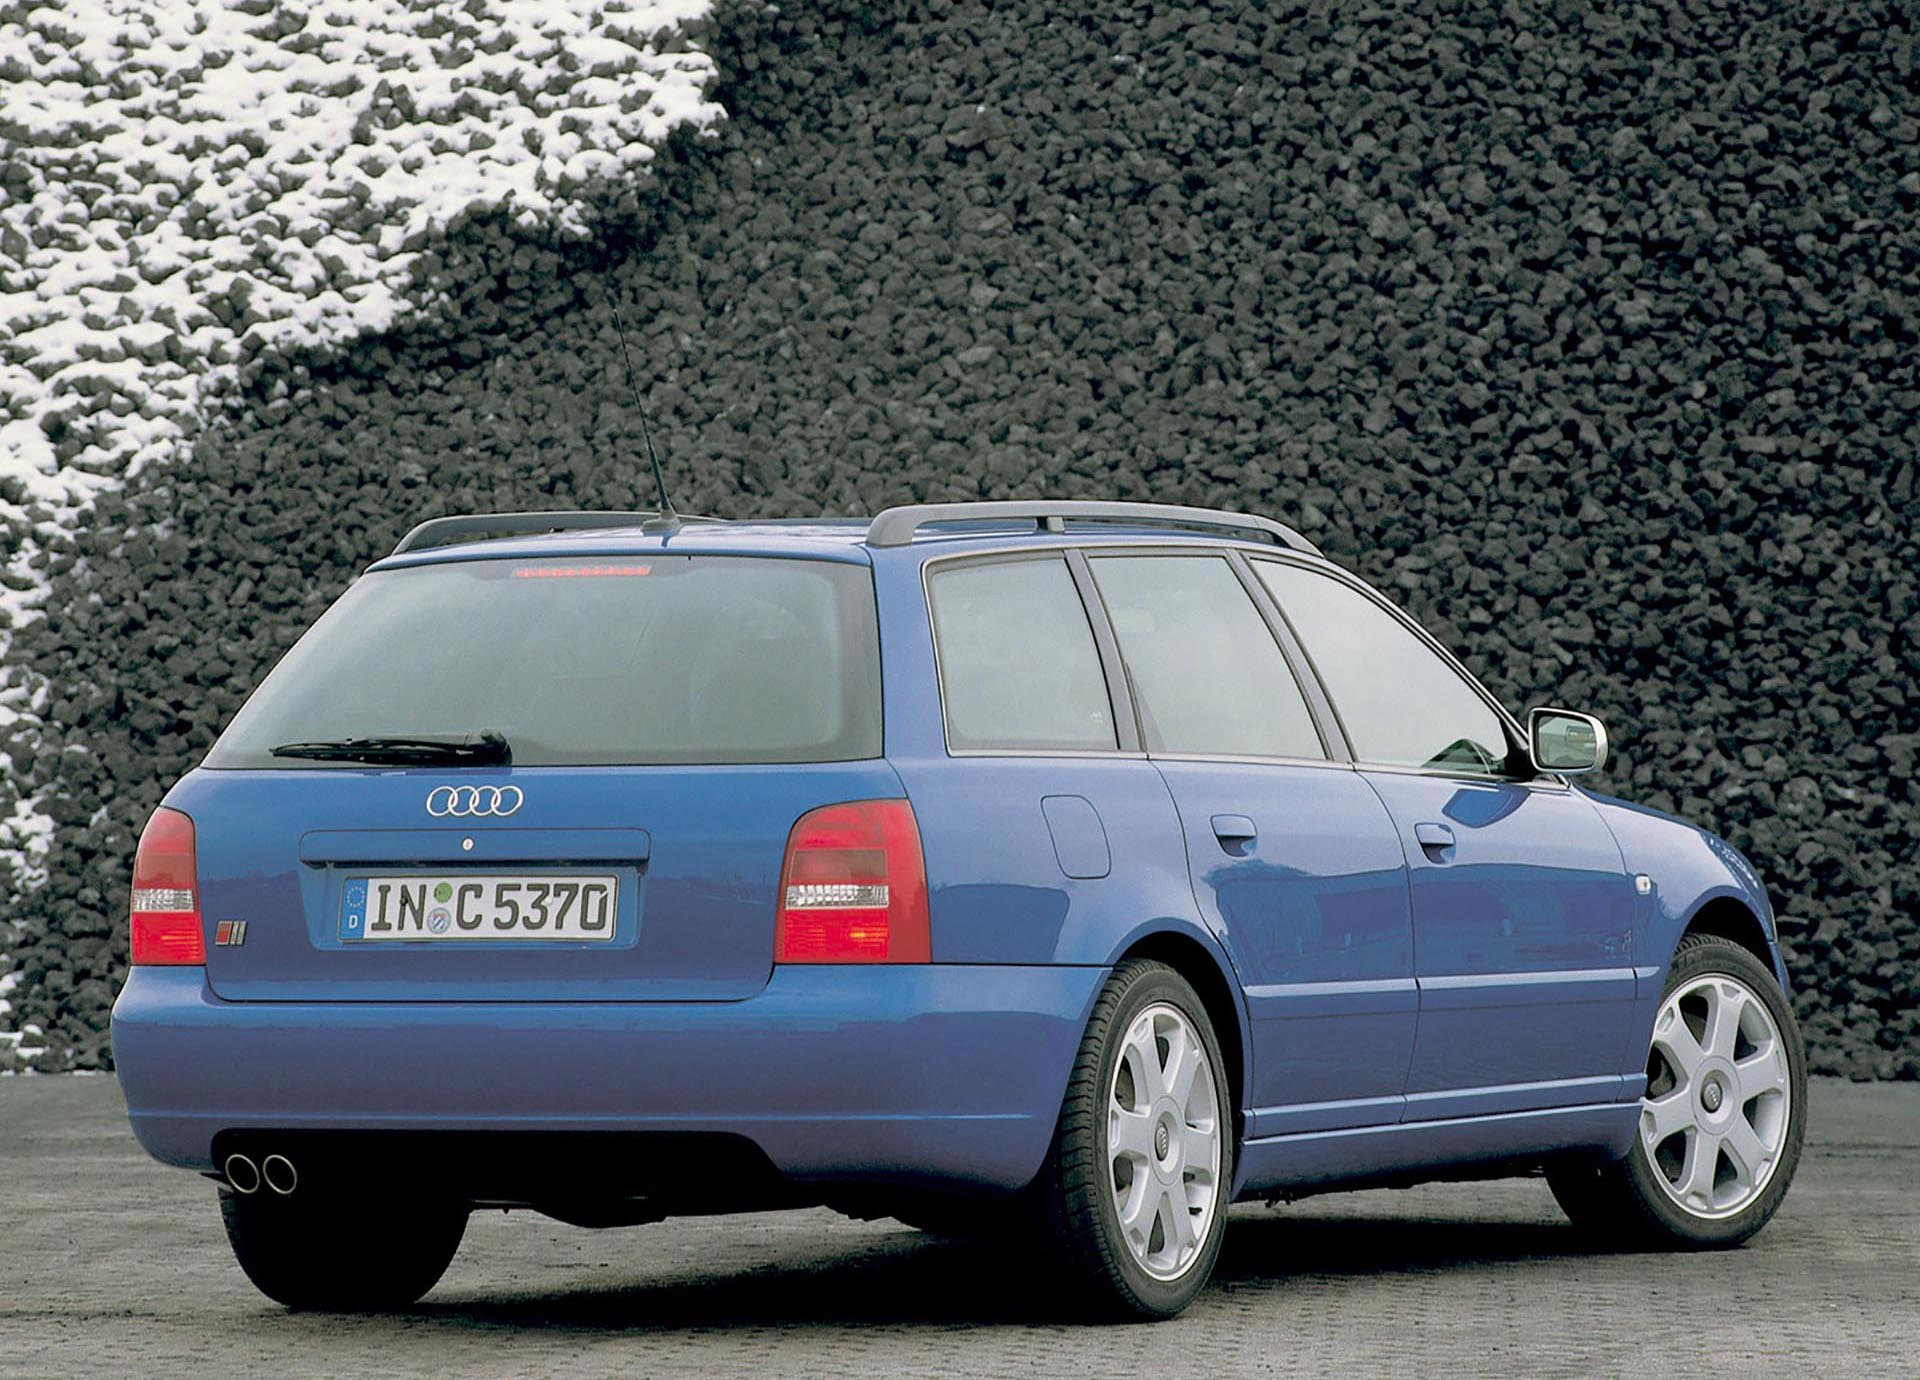 03_B5 Audi S4 2.7t Avant Nogaro Blue rear